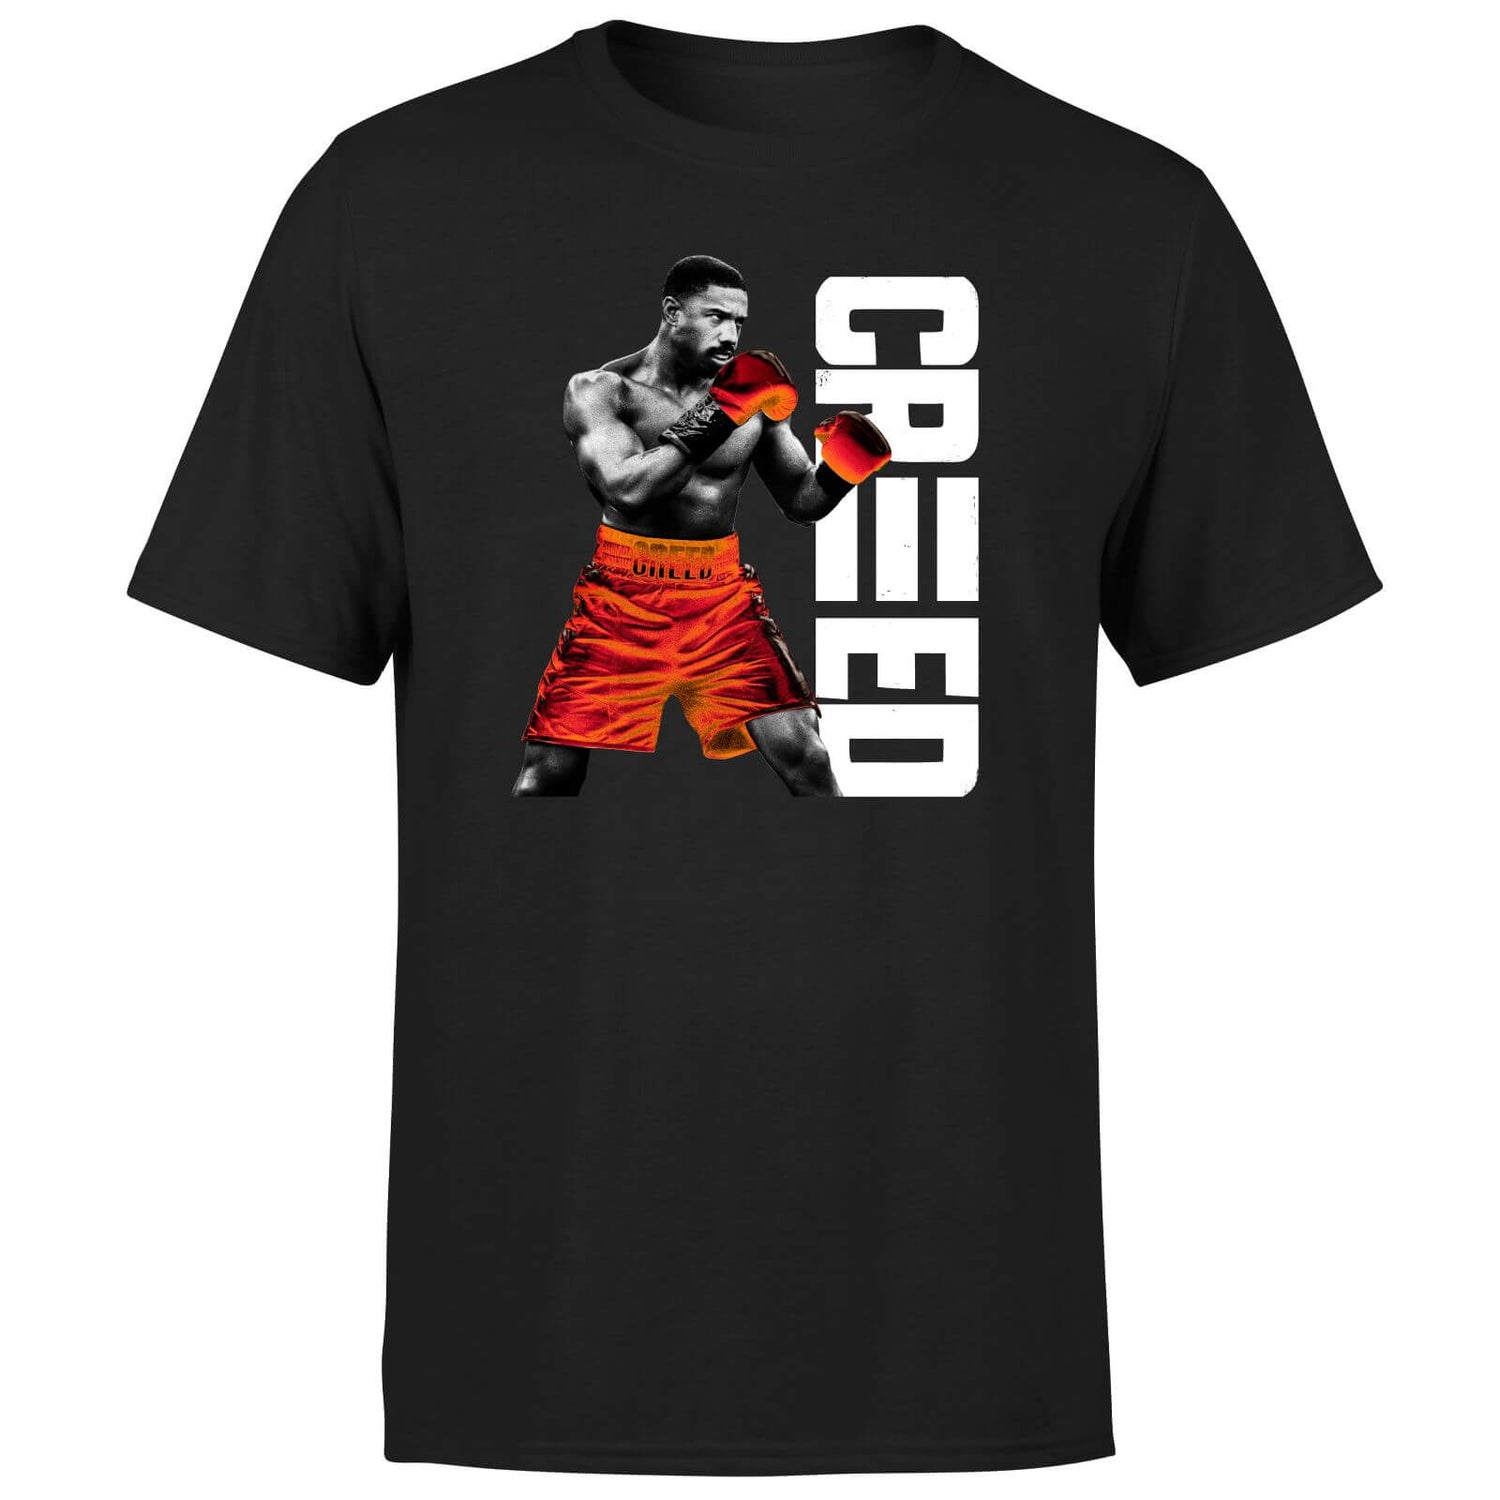 Creed CRIIID Men's T-Shirt - Black